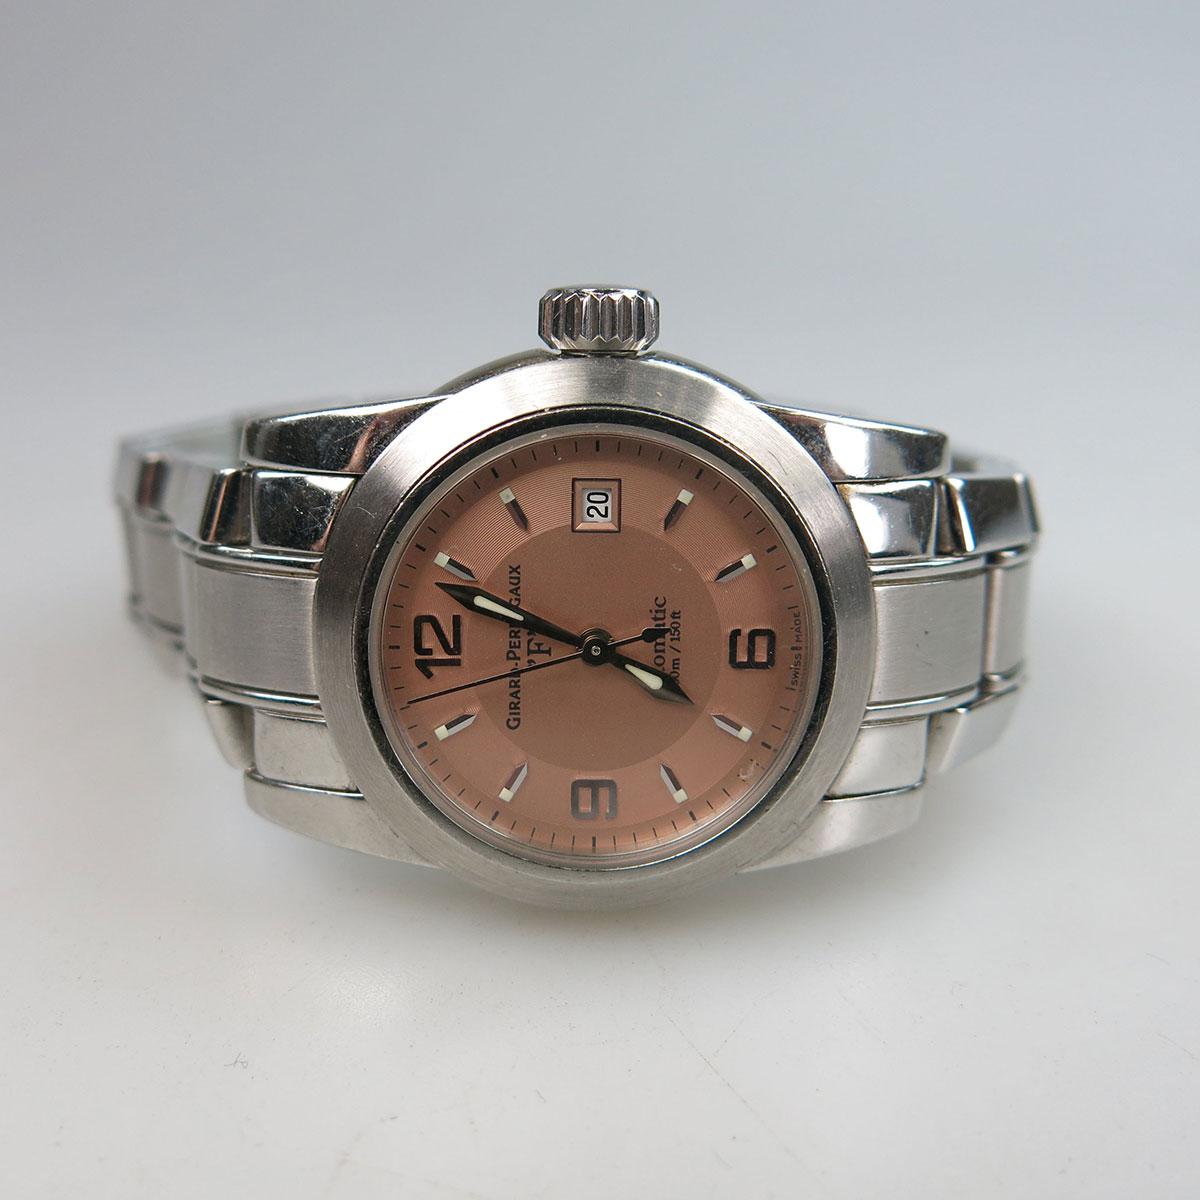 Girard-Perregaux “F” Wristwatch, With Date